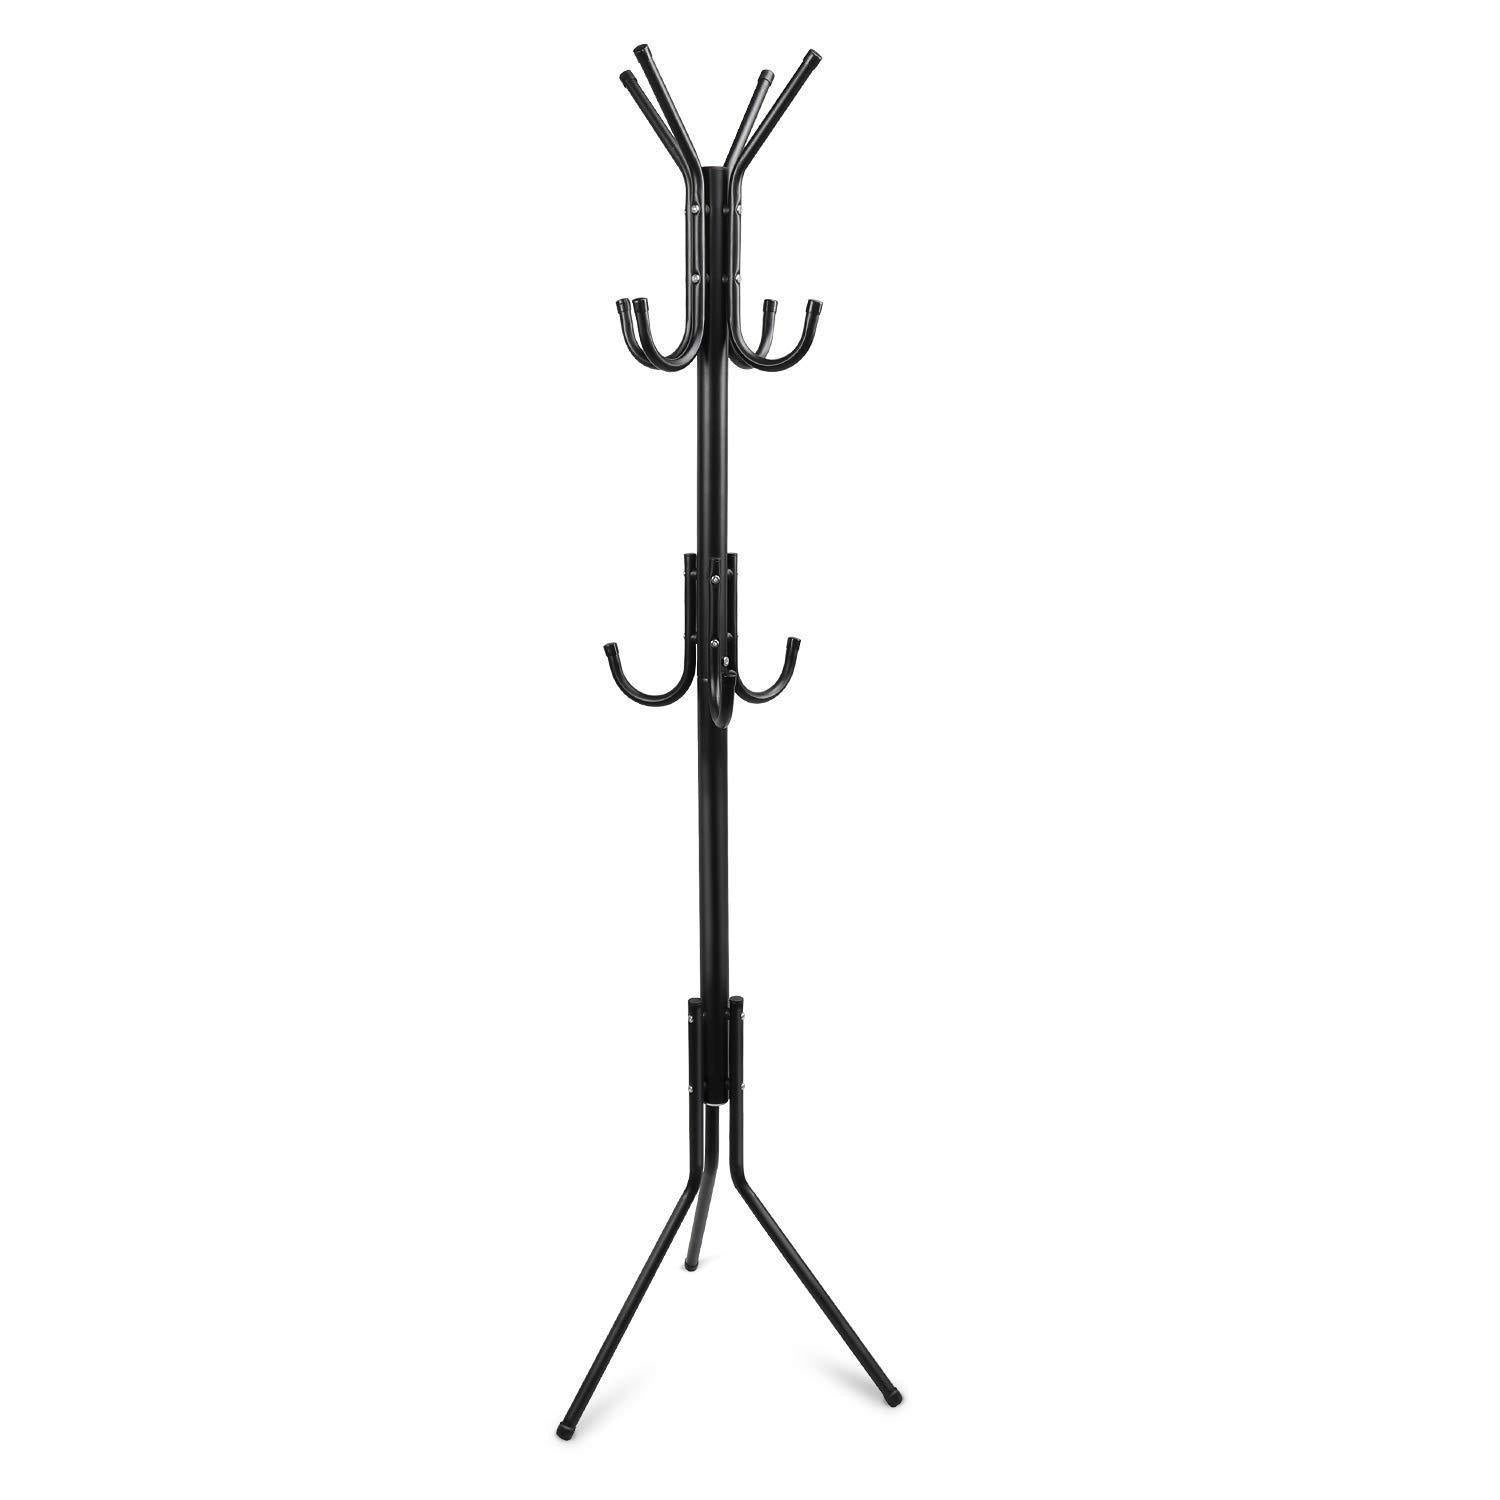 Buy now topvork standing coat rack hanger holder hooks for dress jacket hat and umbrella tree stand with base metal black